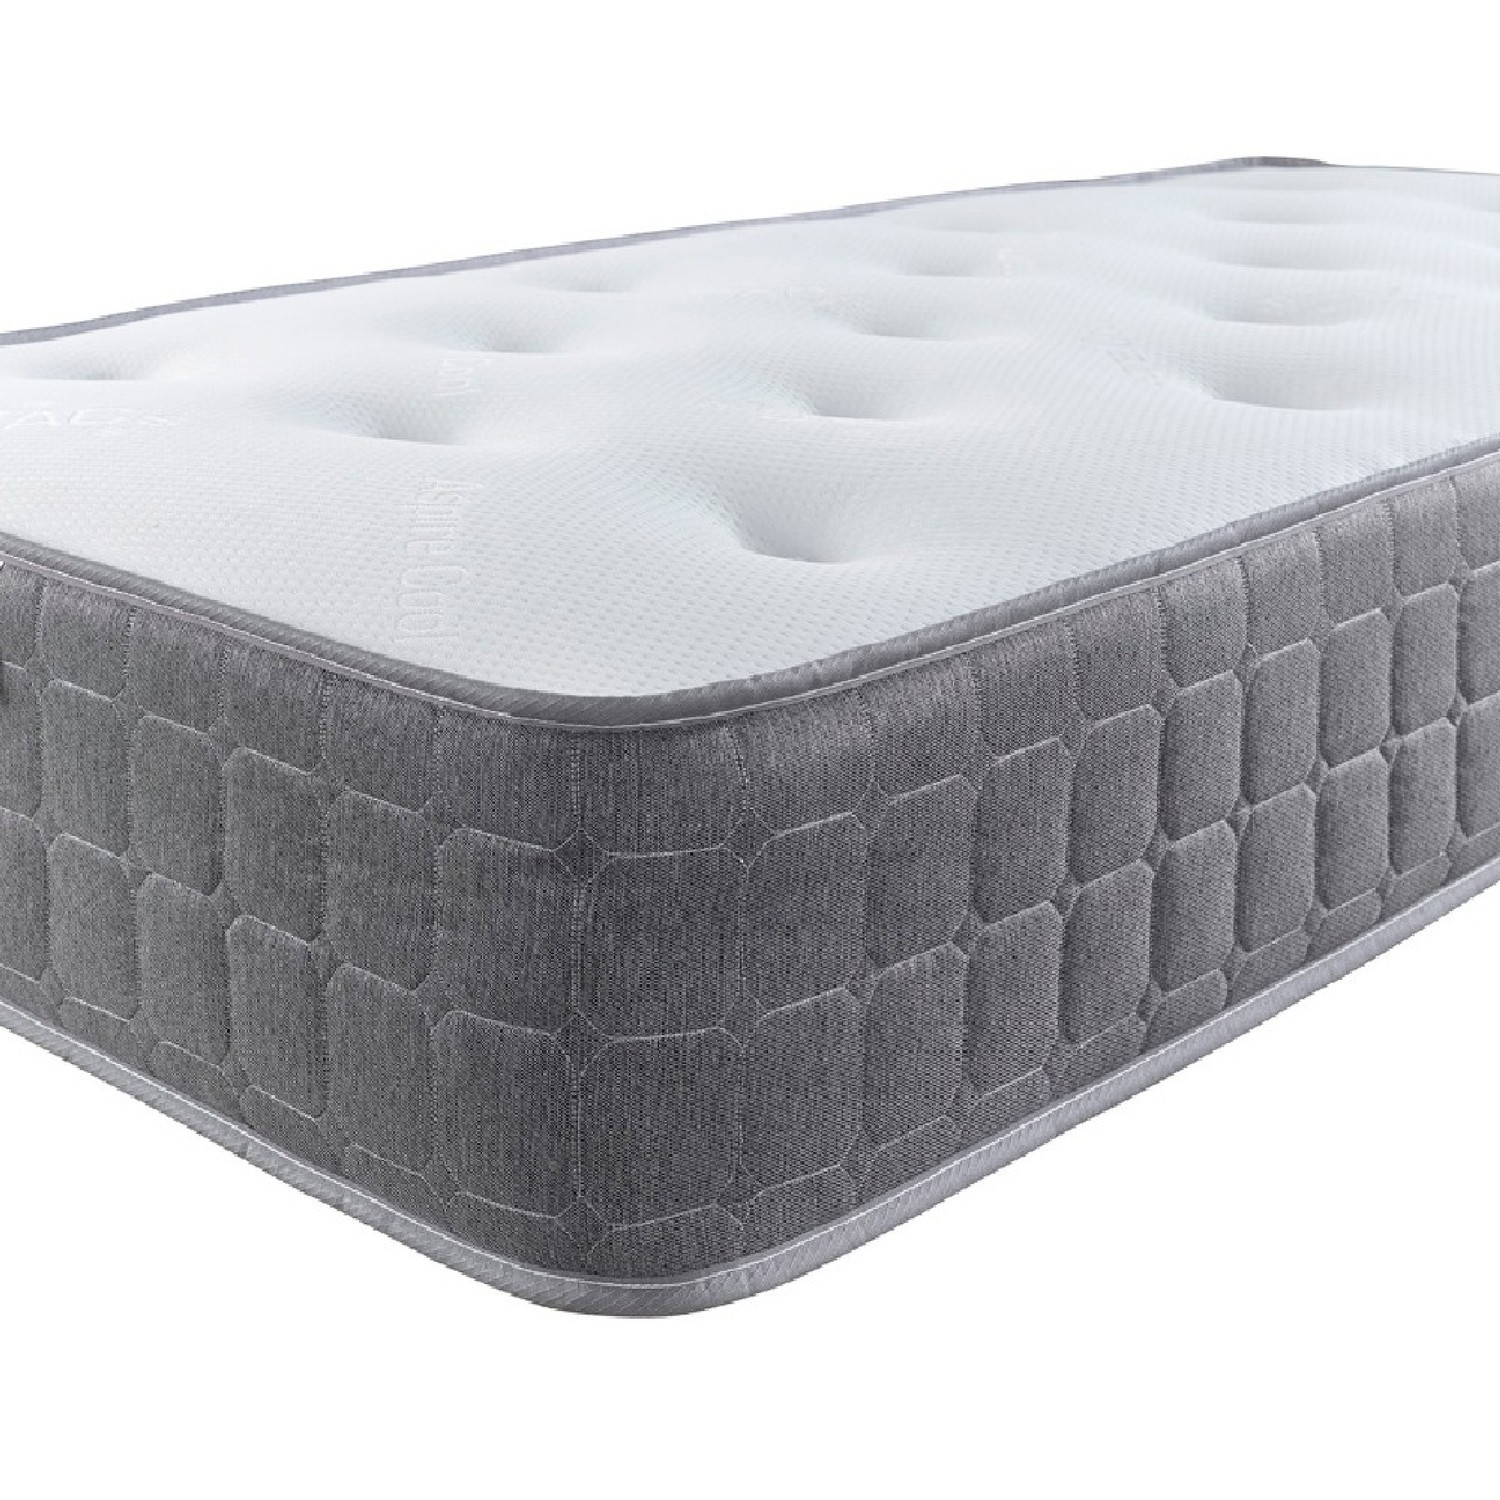 Aspire furniture quad comfort natural eco tufted spring mattress - double